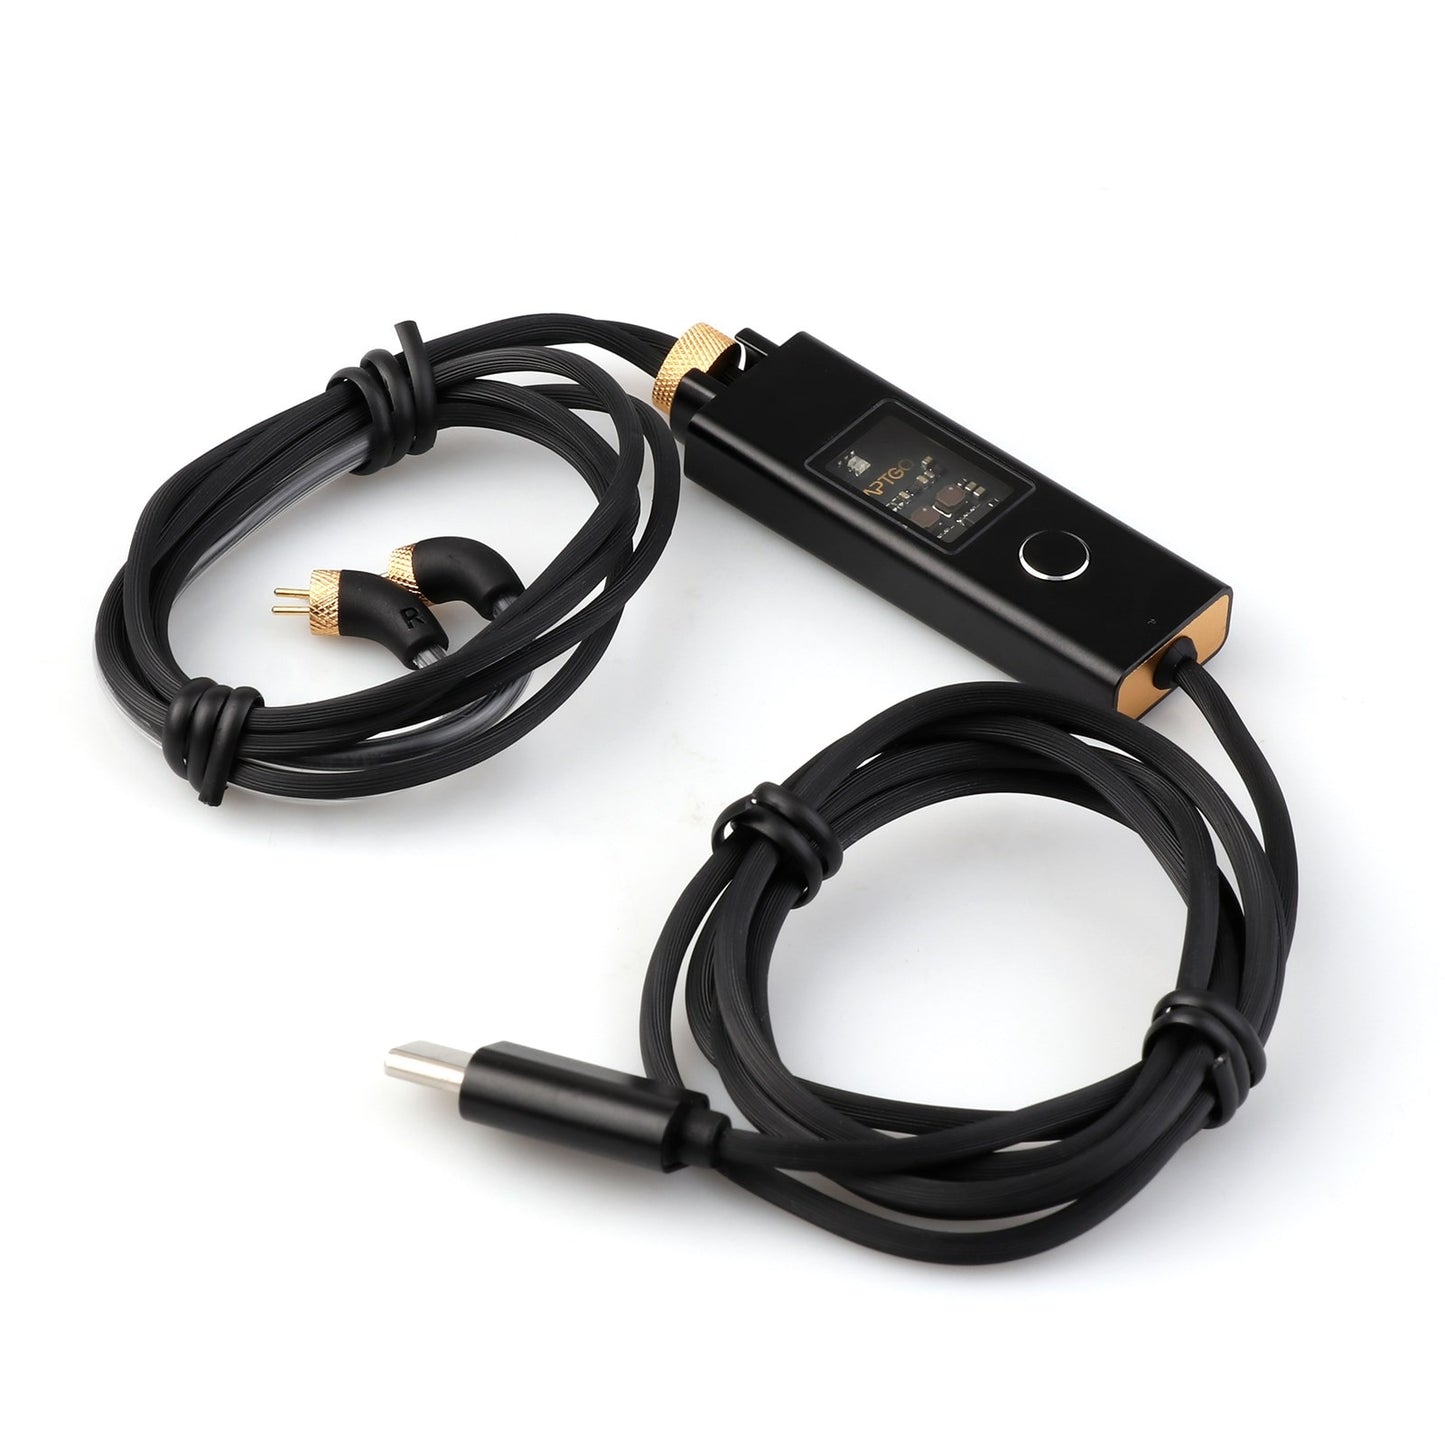 RAPTGO MR-10 Type-C Audio Cable: 0.78mm/2PIN, Advanced DAC Technology - The HiFi Cat